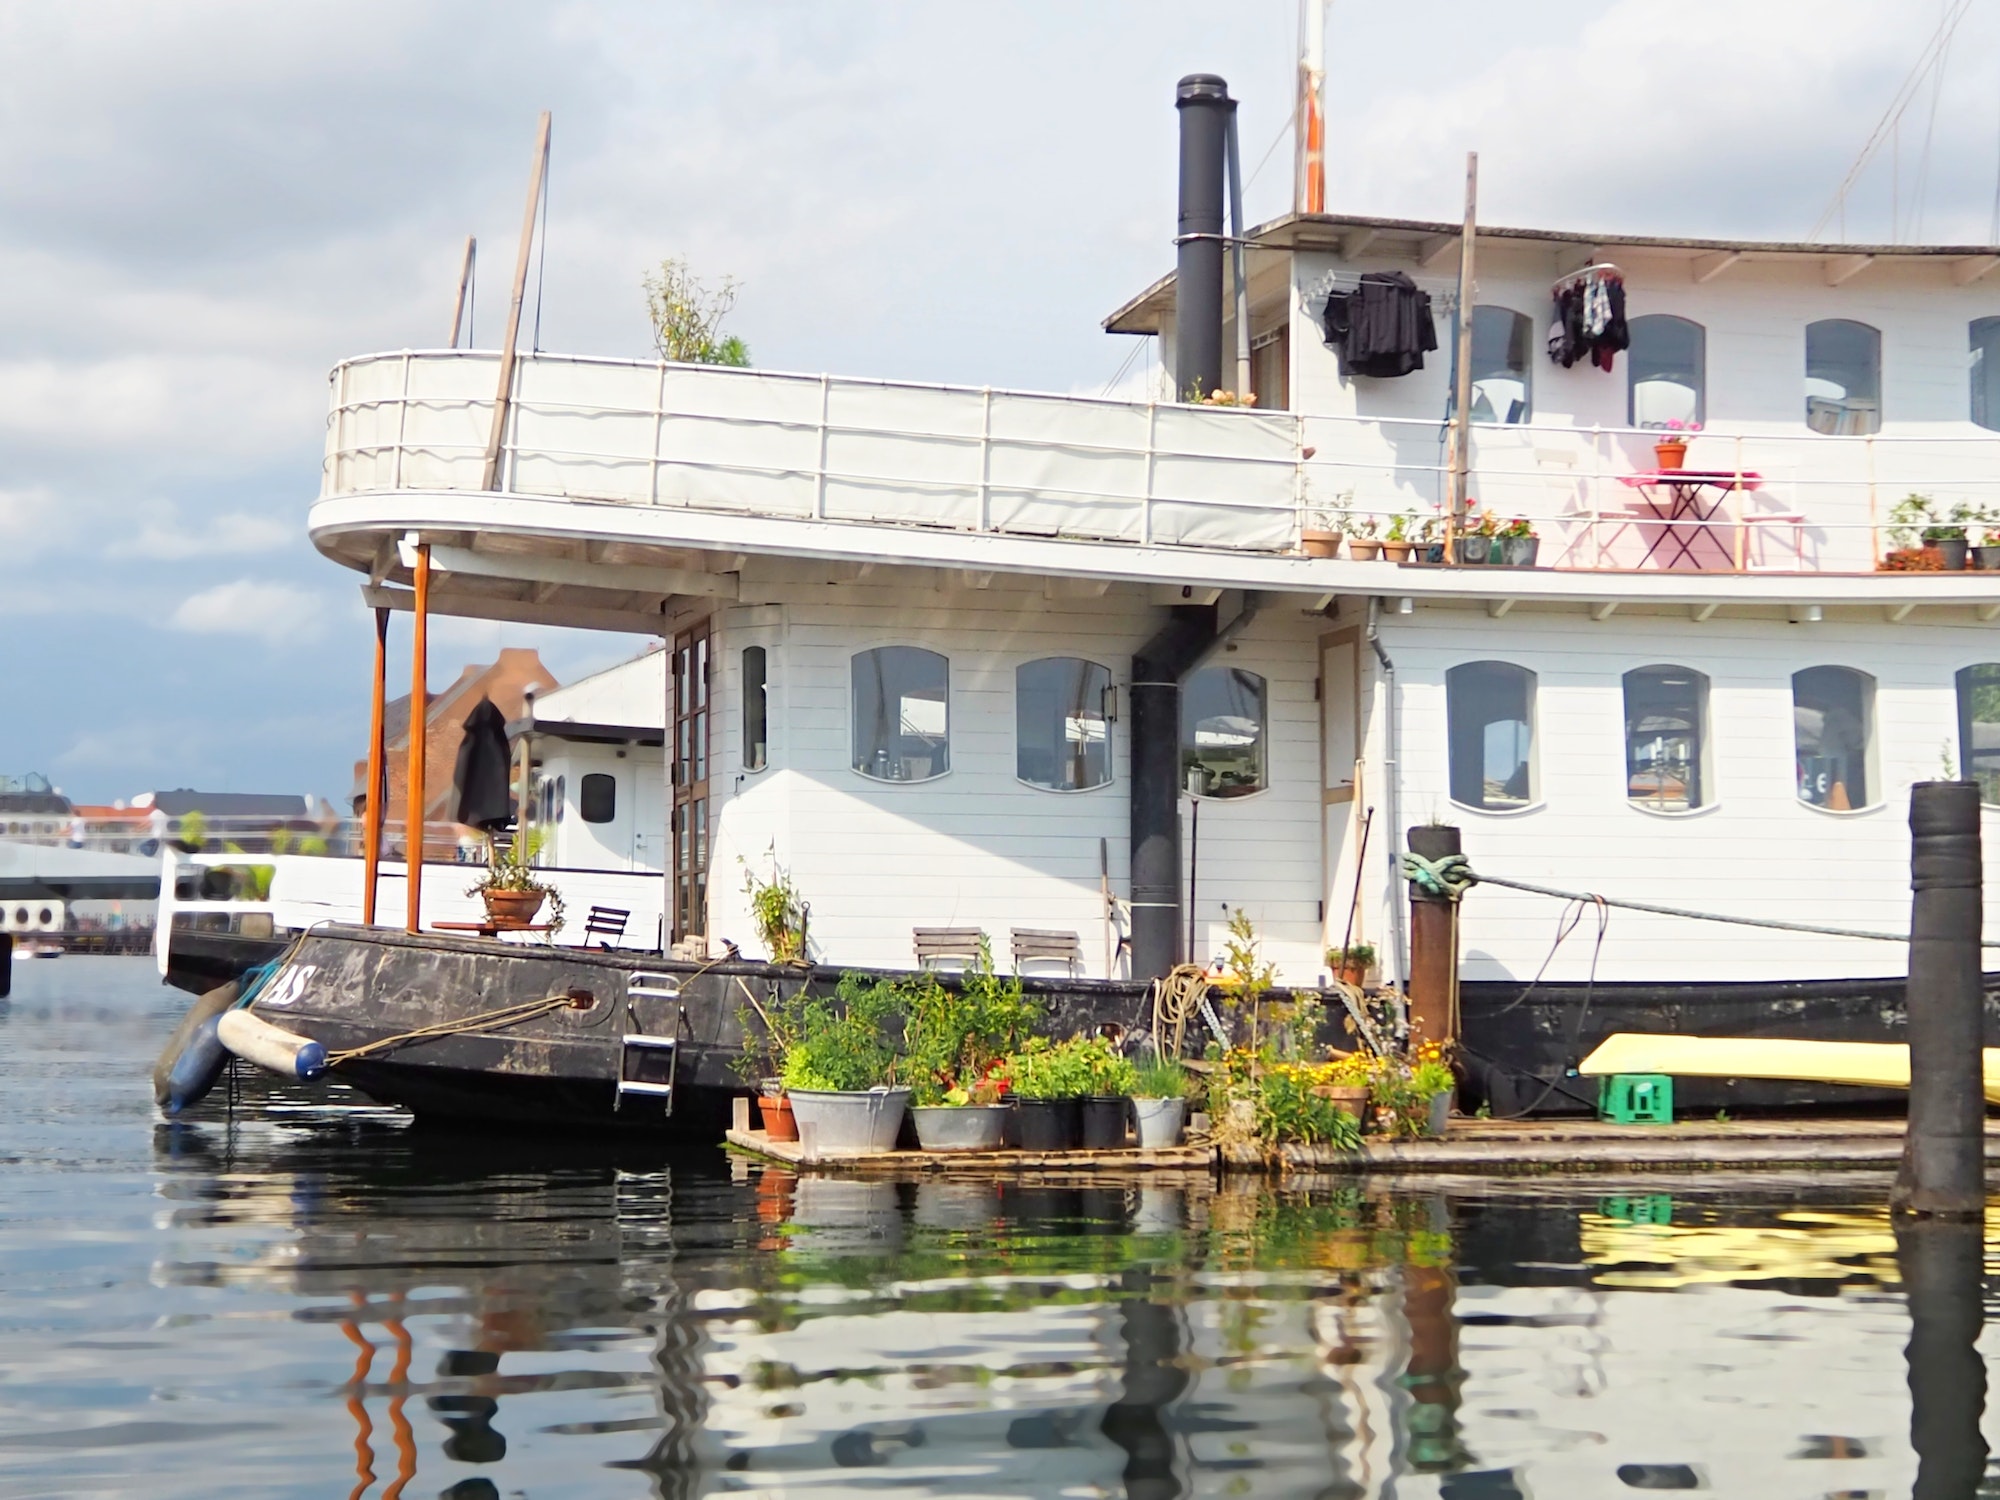 Boat house on the river in Copenhagen.